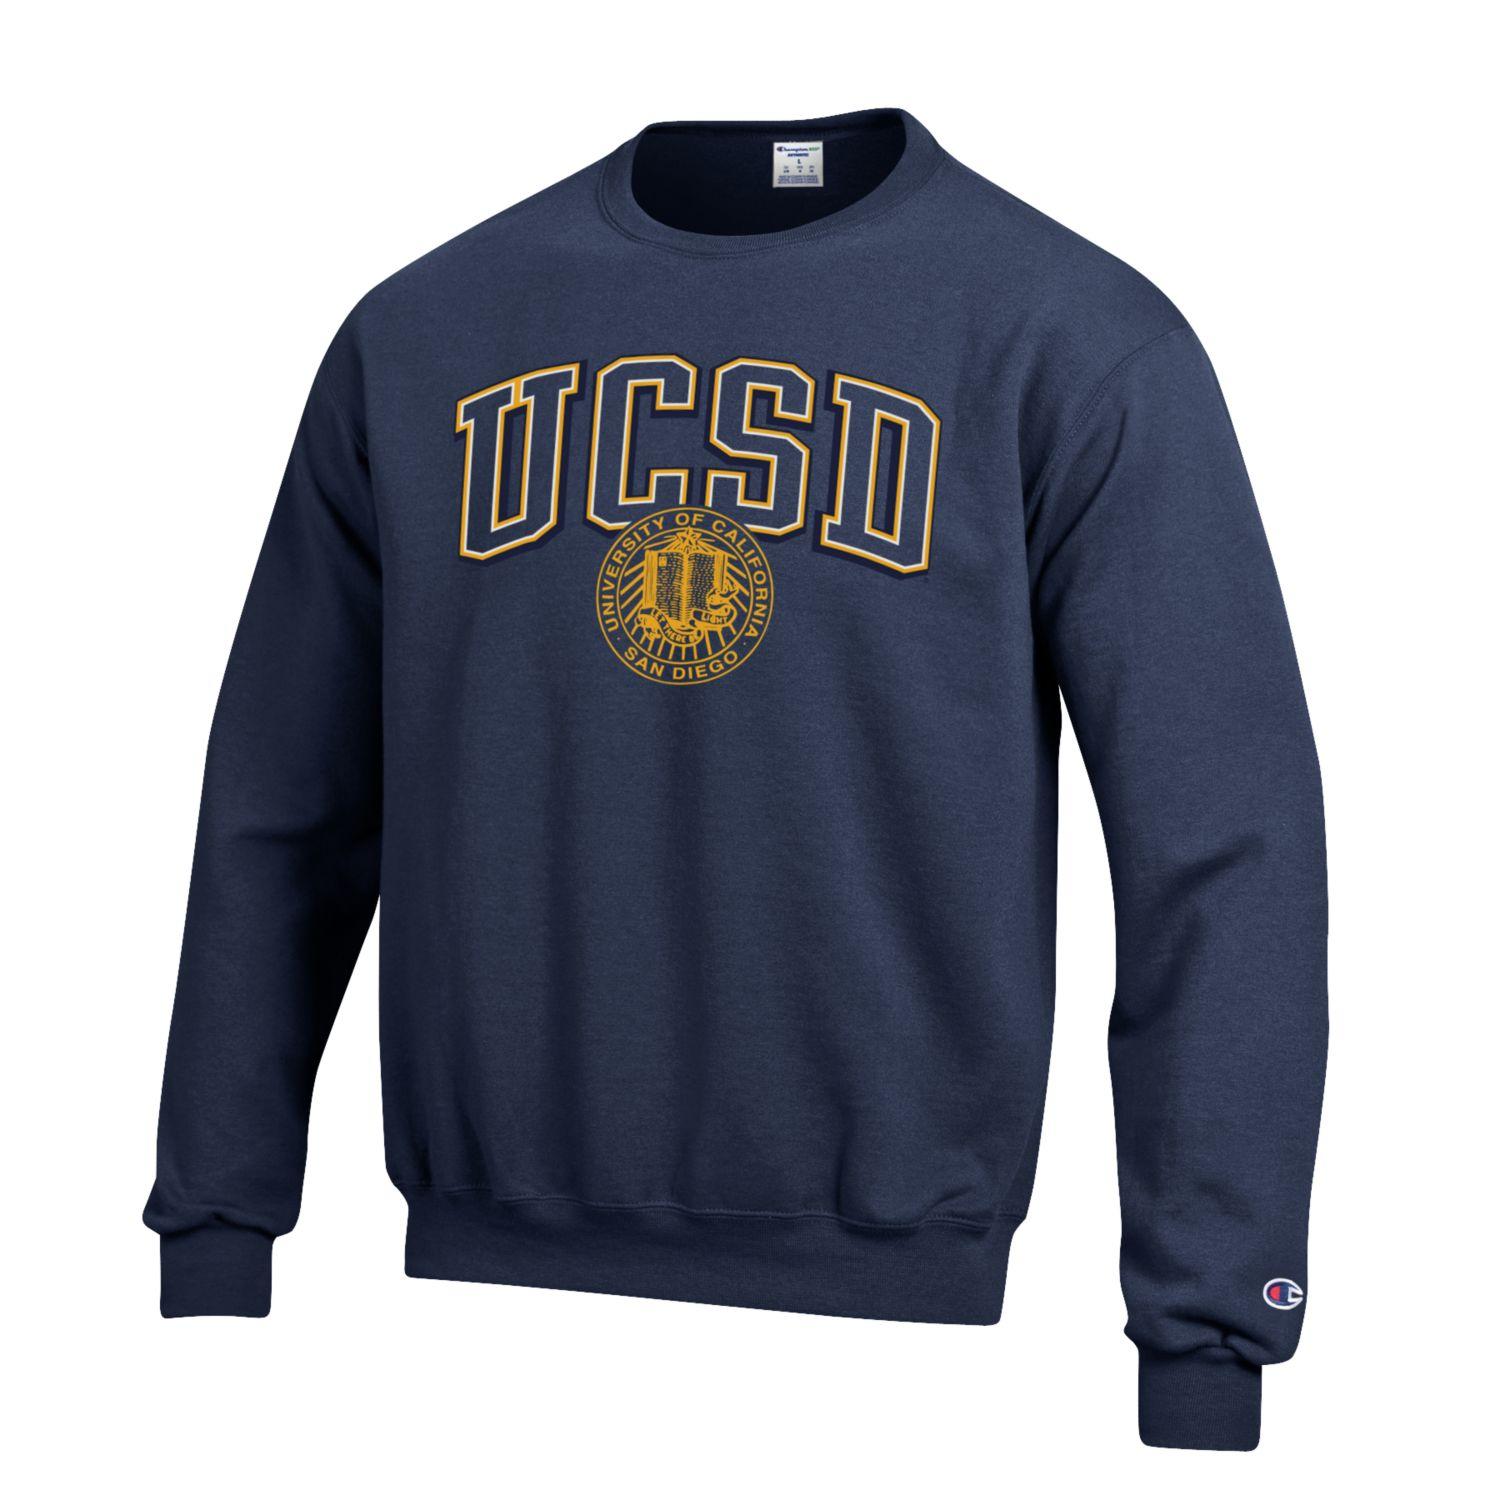 U.C. San Diego Tritons Block & Seal Crew-Neck Sweatshirt-Navy-Shop College Wear